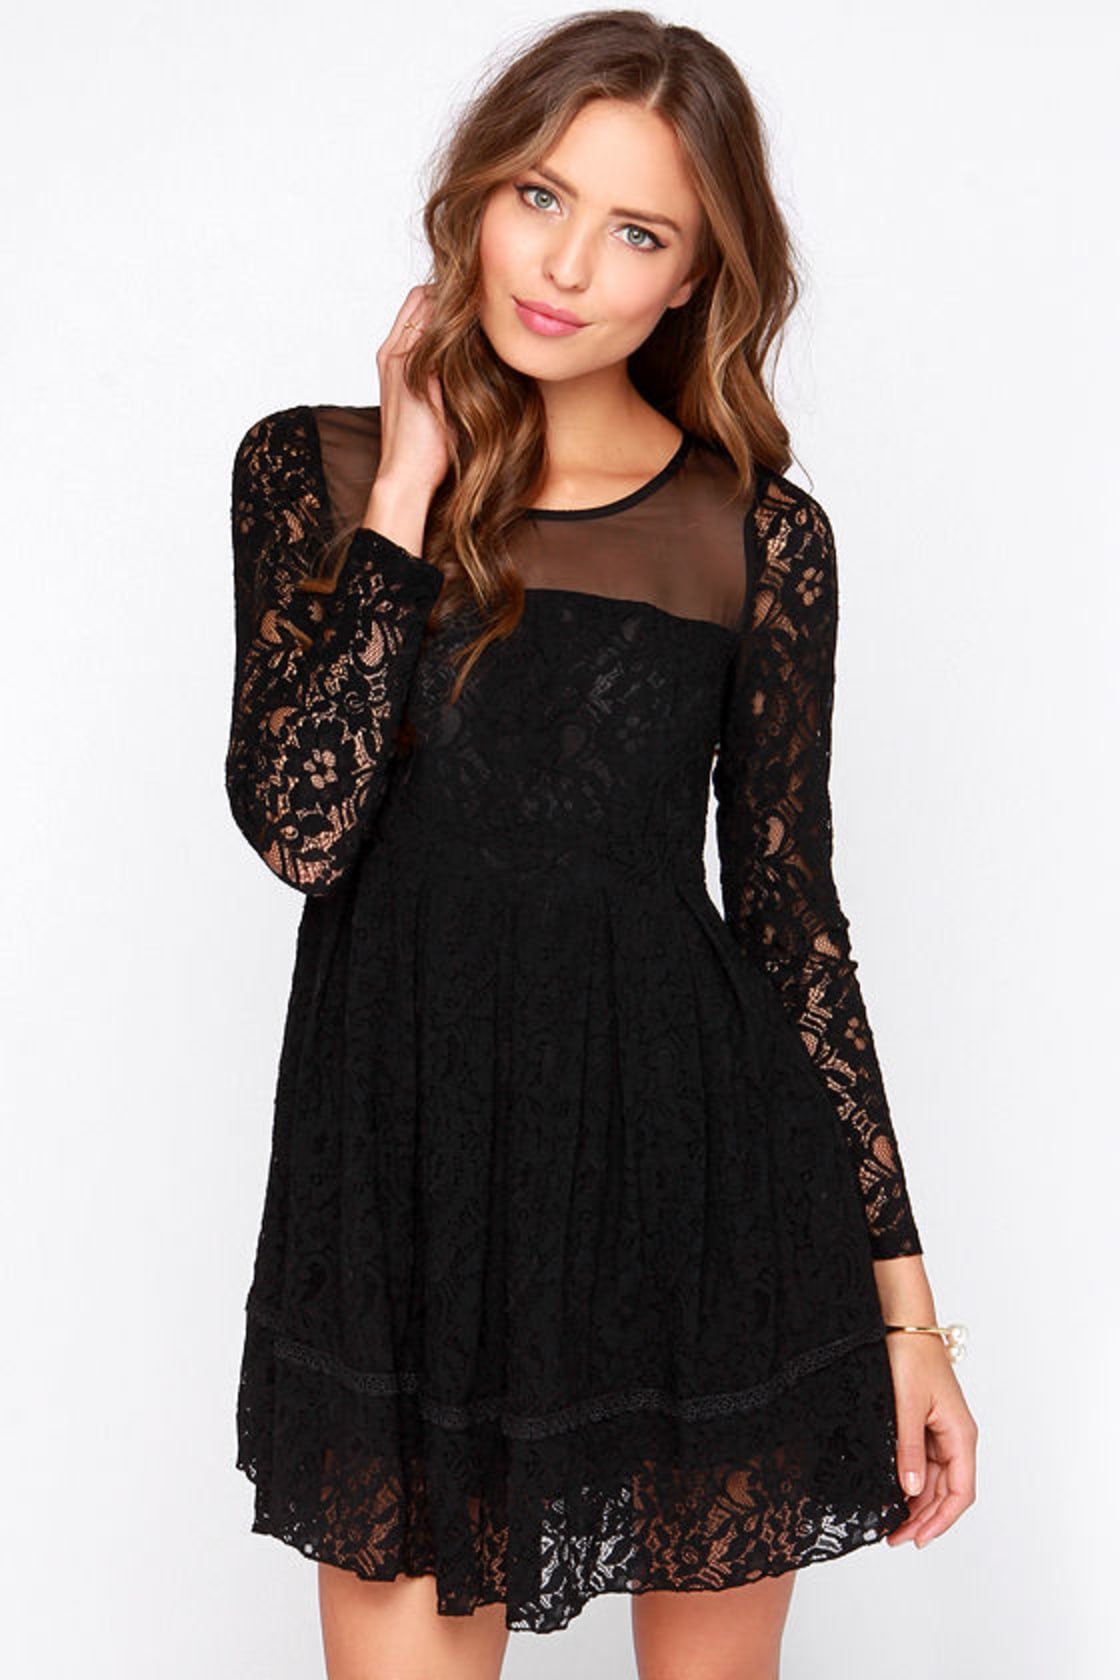 Gurdon Black Dress - Long Sleeve Dress - Lace Dress - $88.00 - Lulus